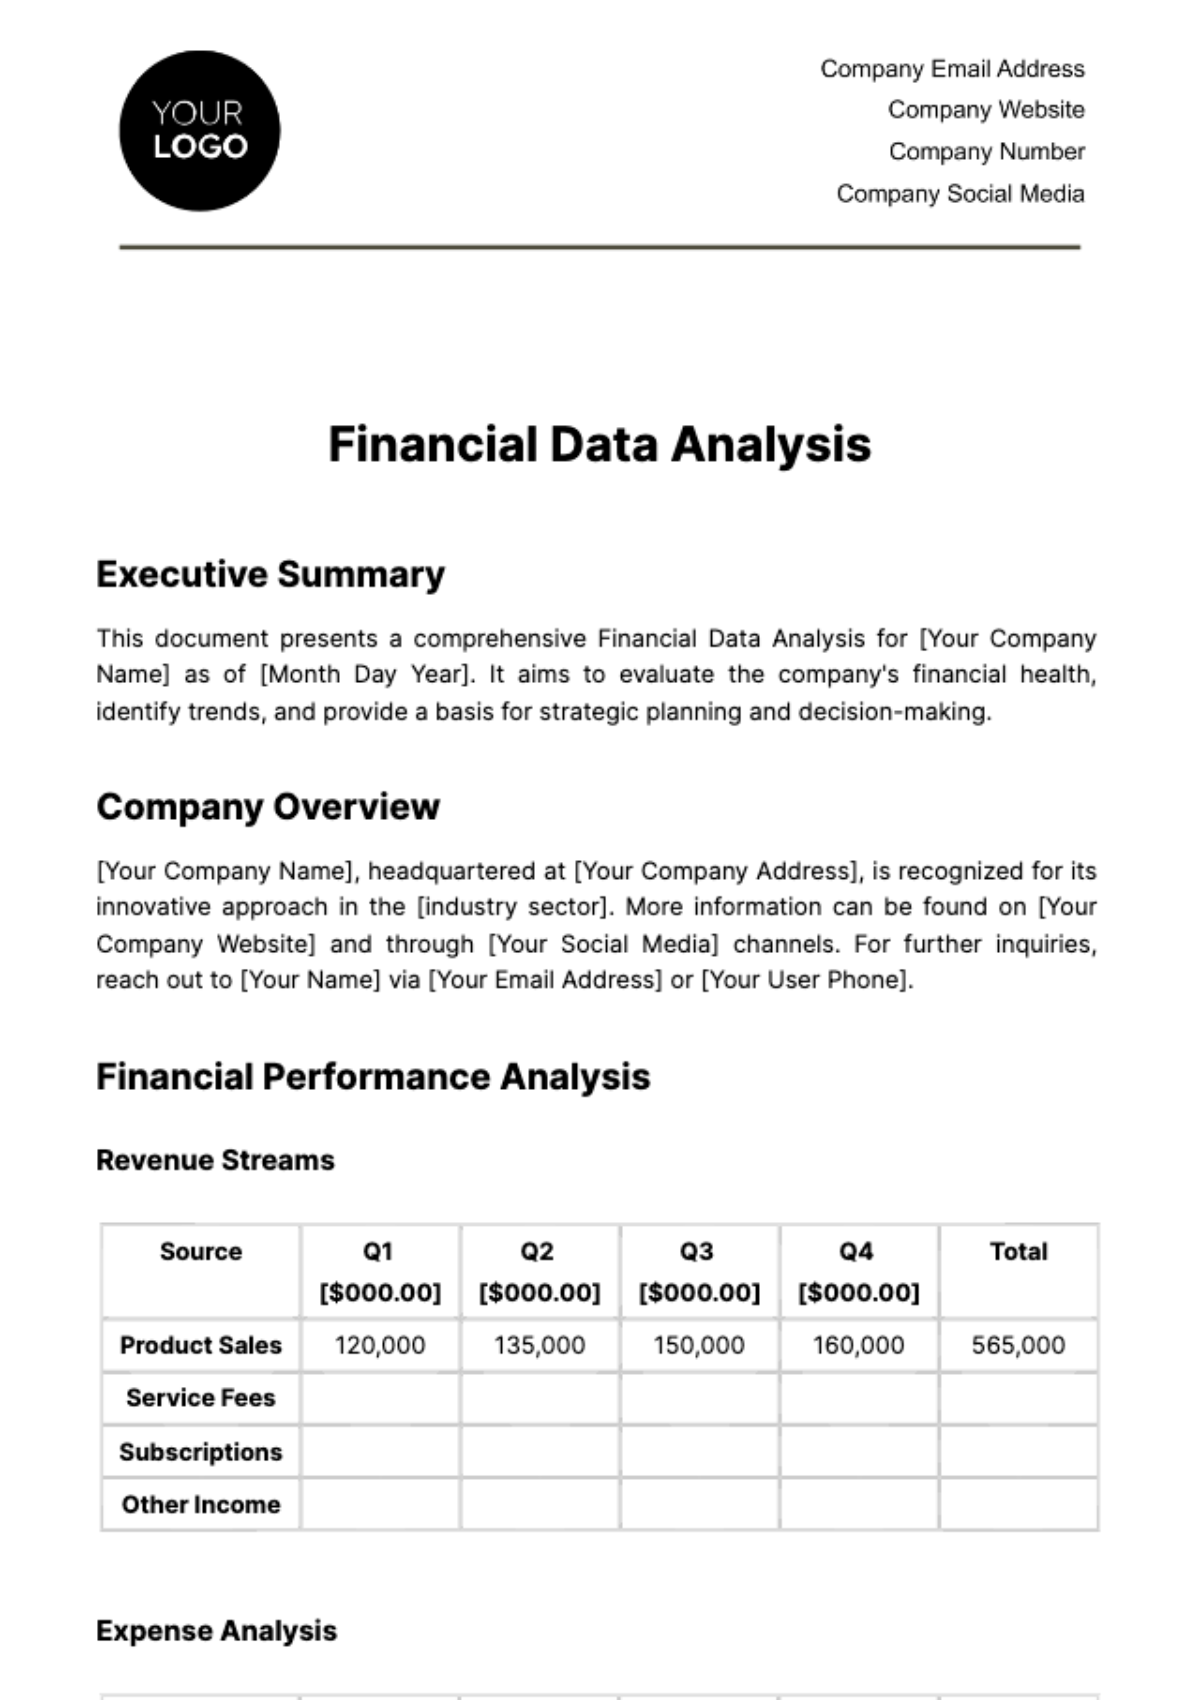 Free Financial Data Analysis Template